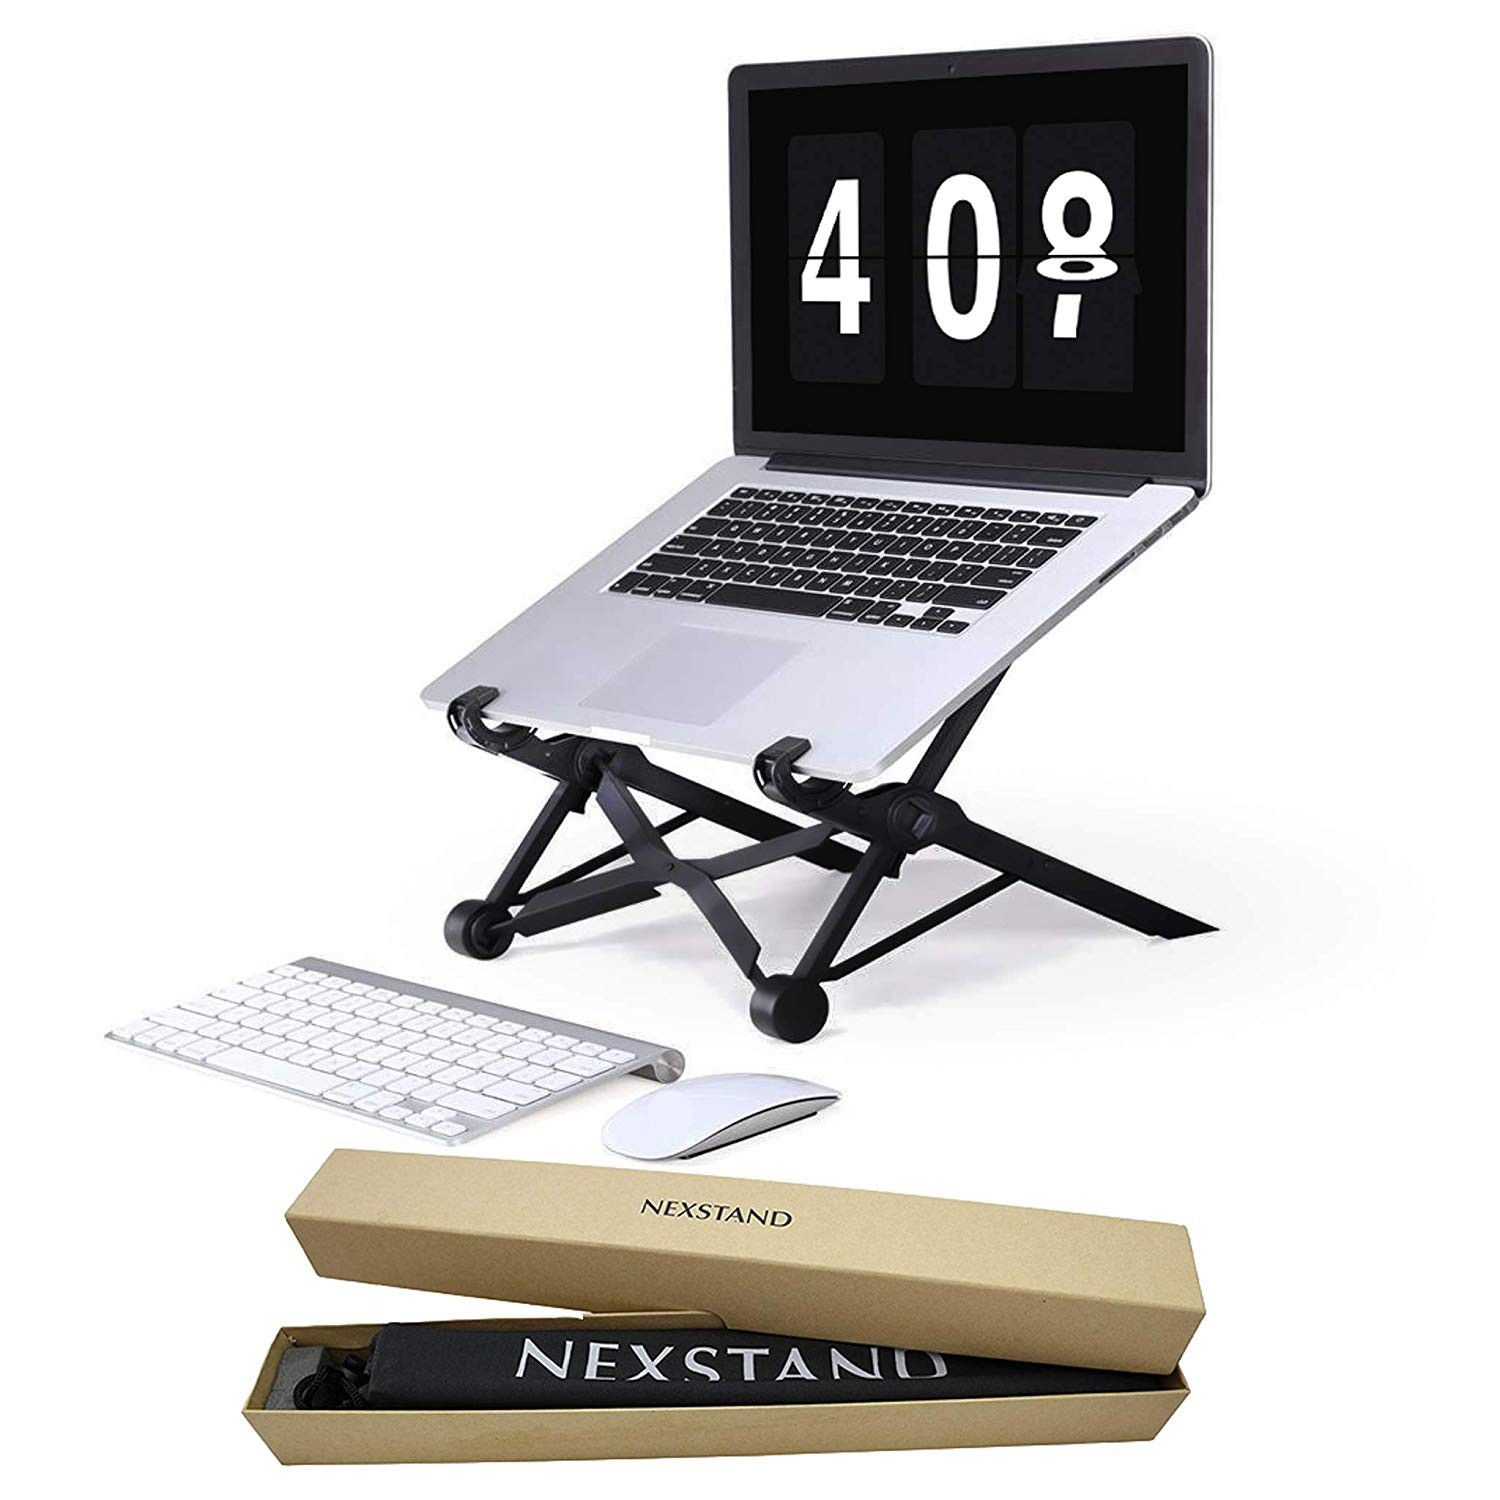 New Nexstand Laptop Stand